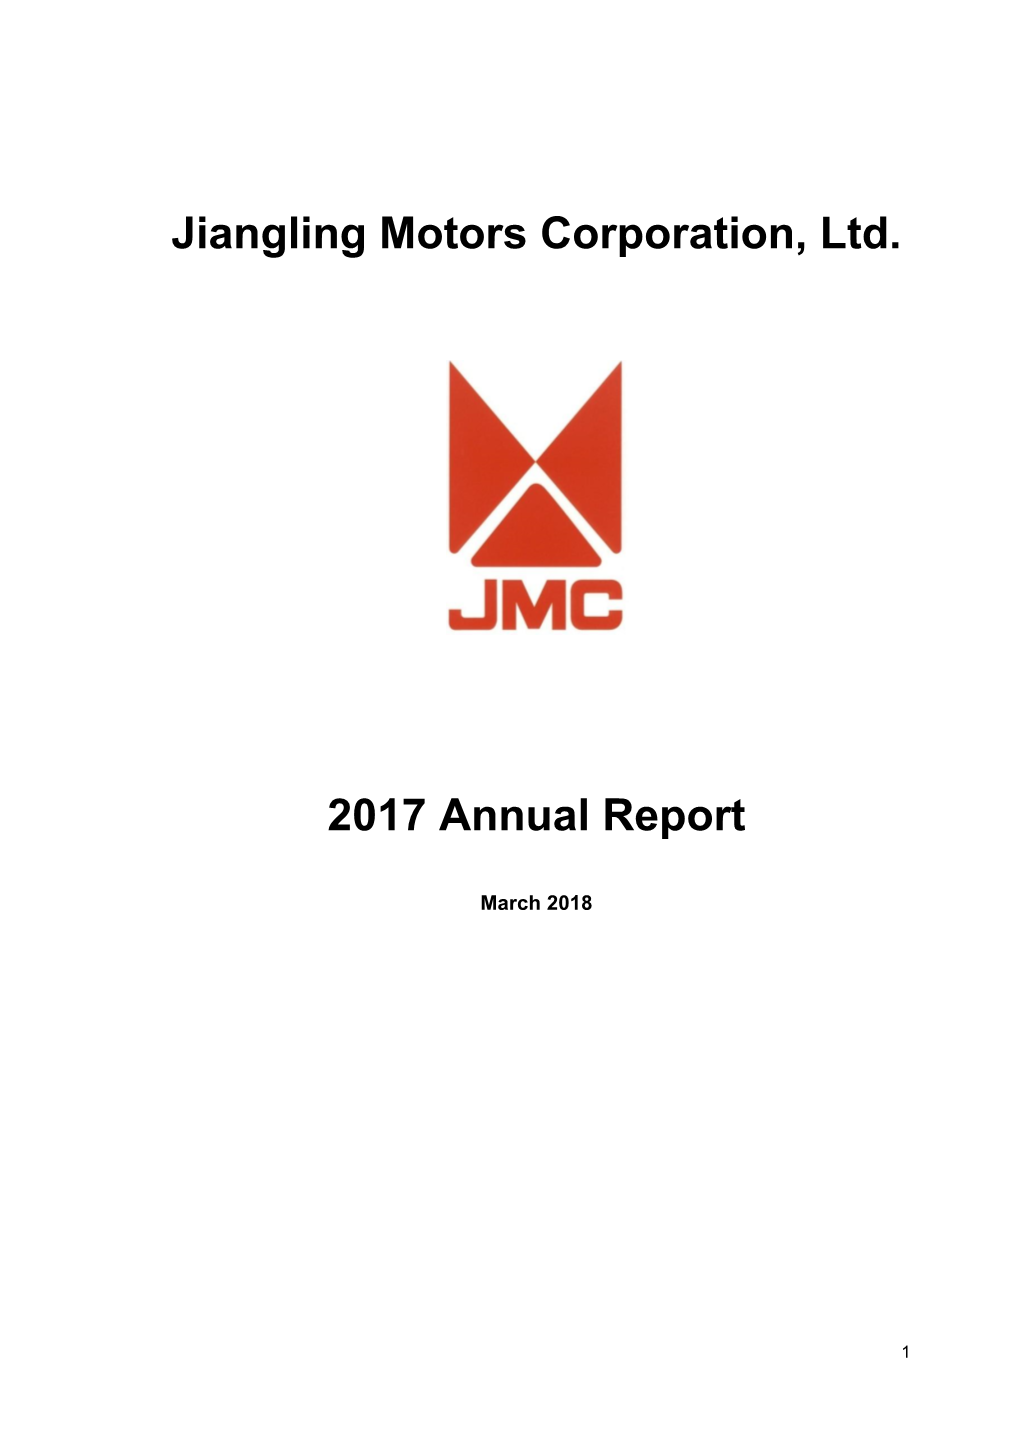 Jiangling Motors Corporation, Ltd. 2017 Annual Report